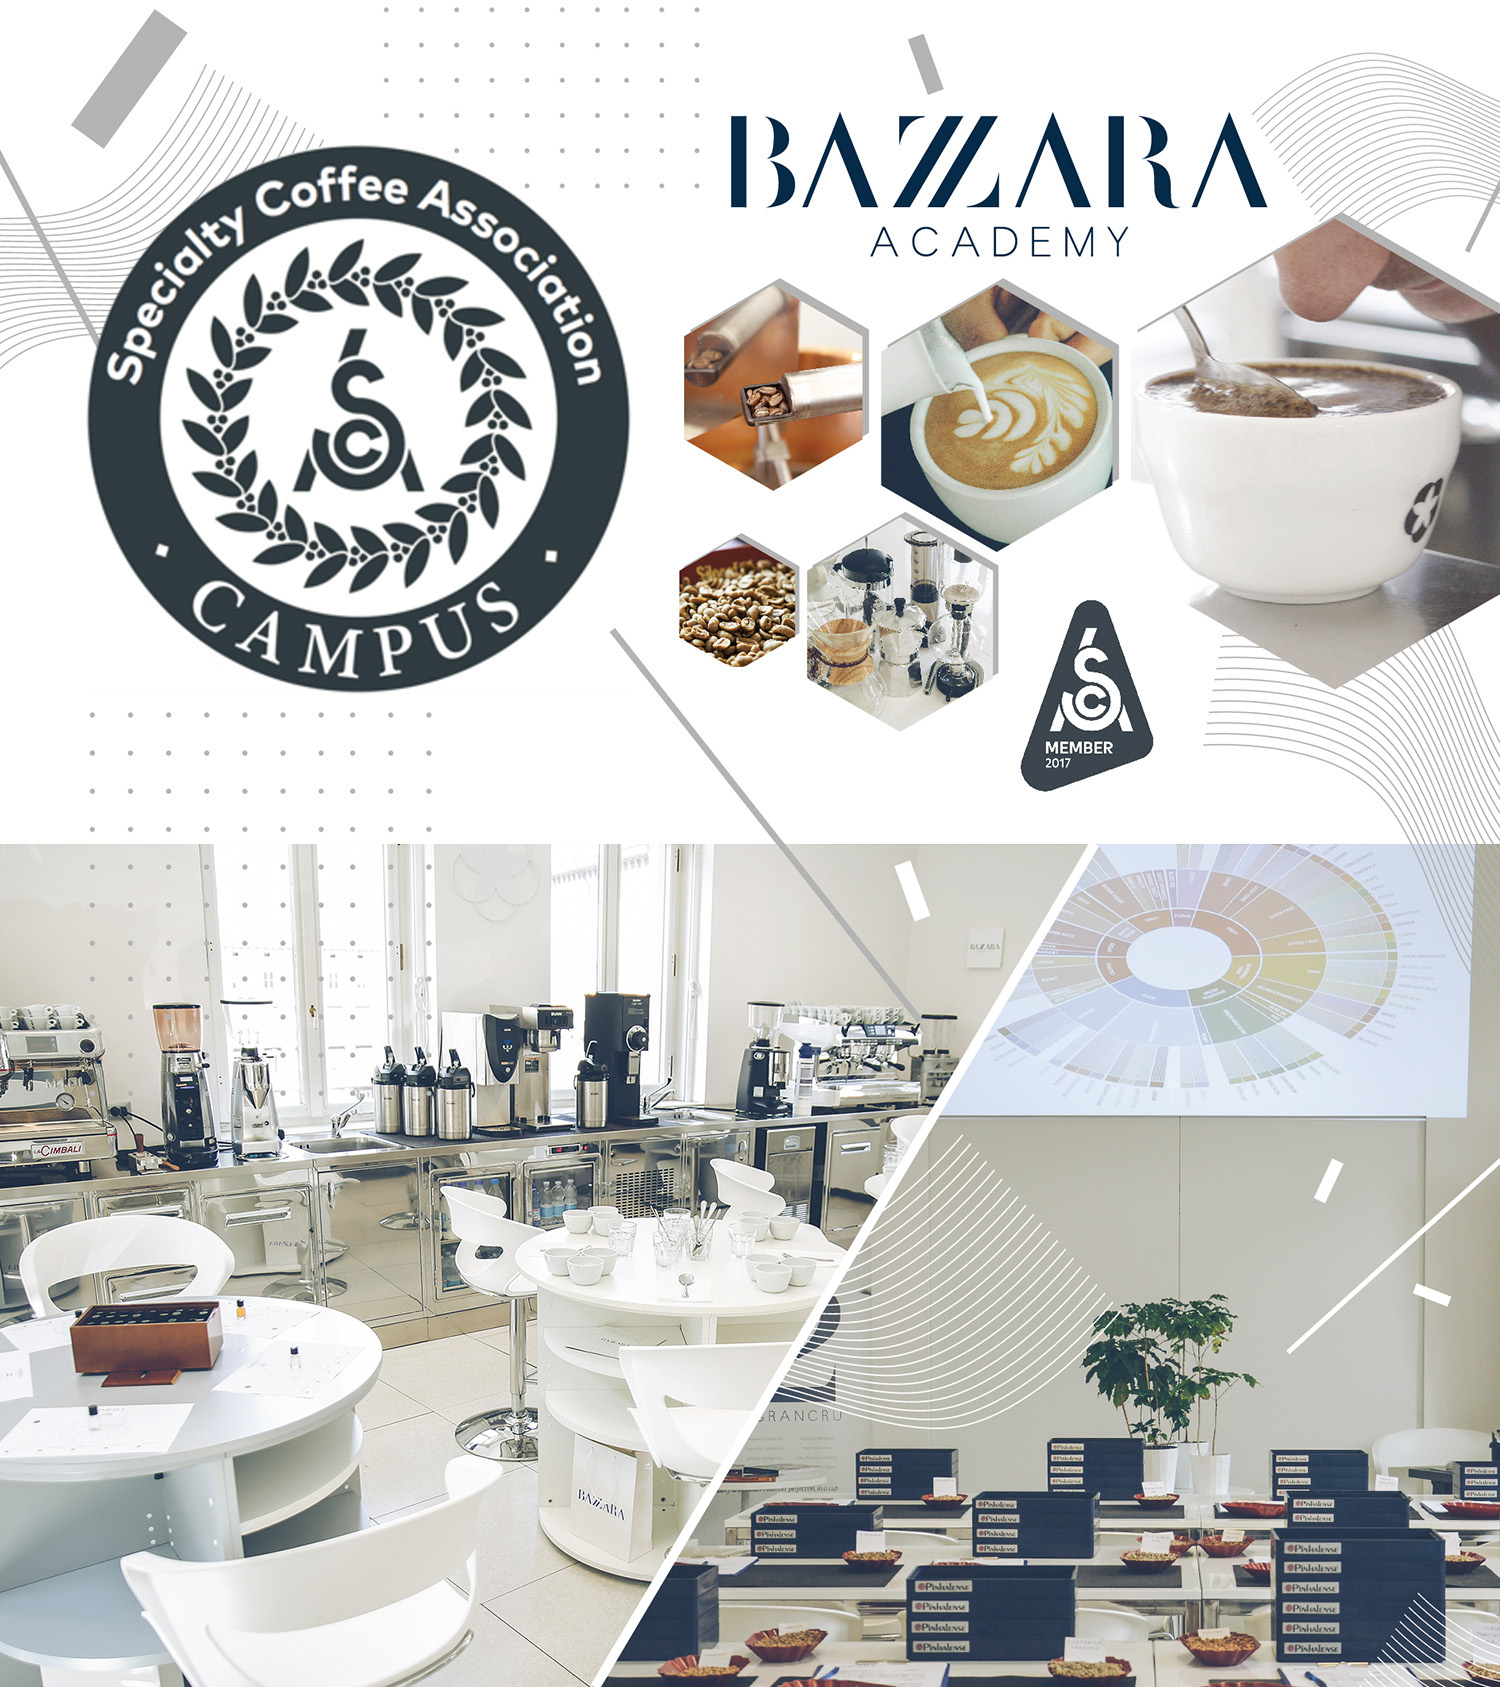 Bazzara Academy